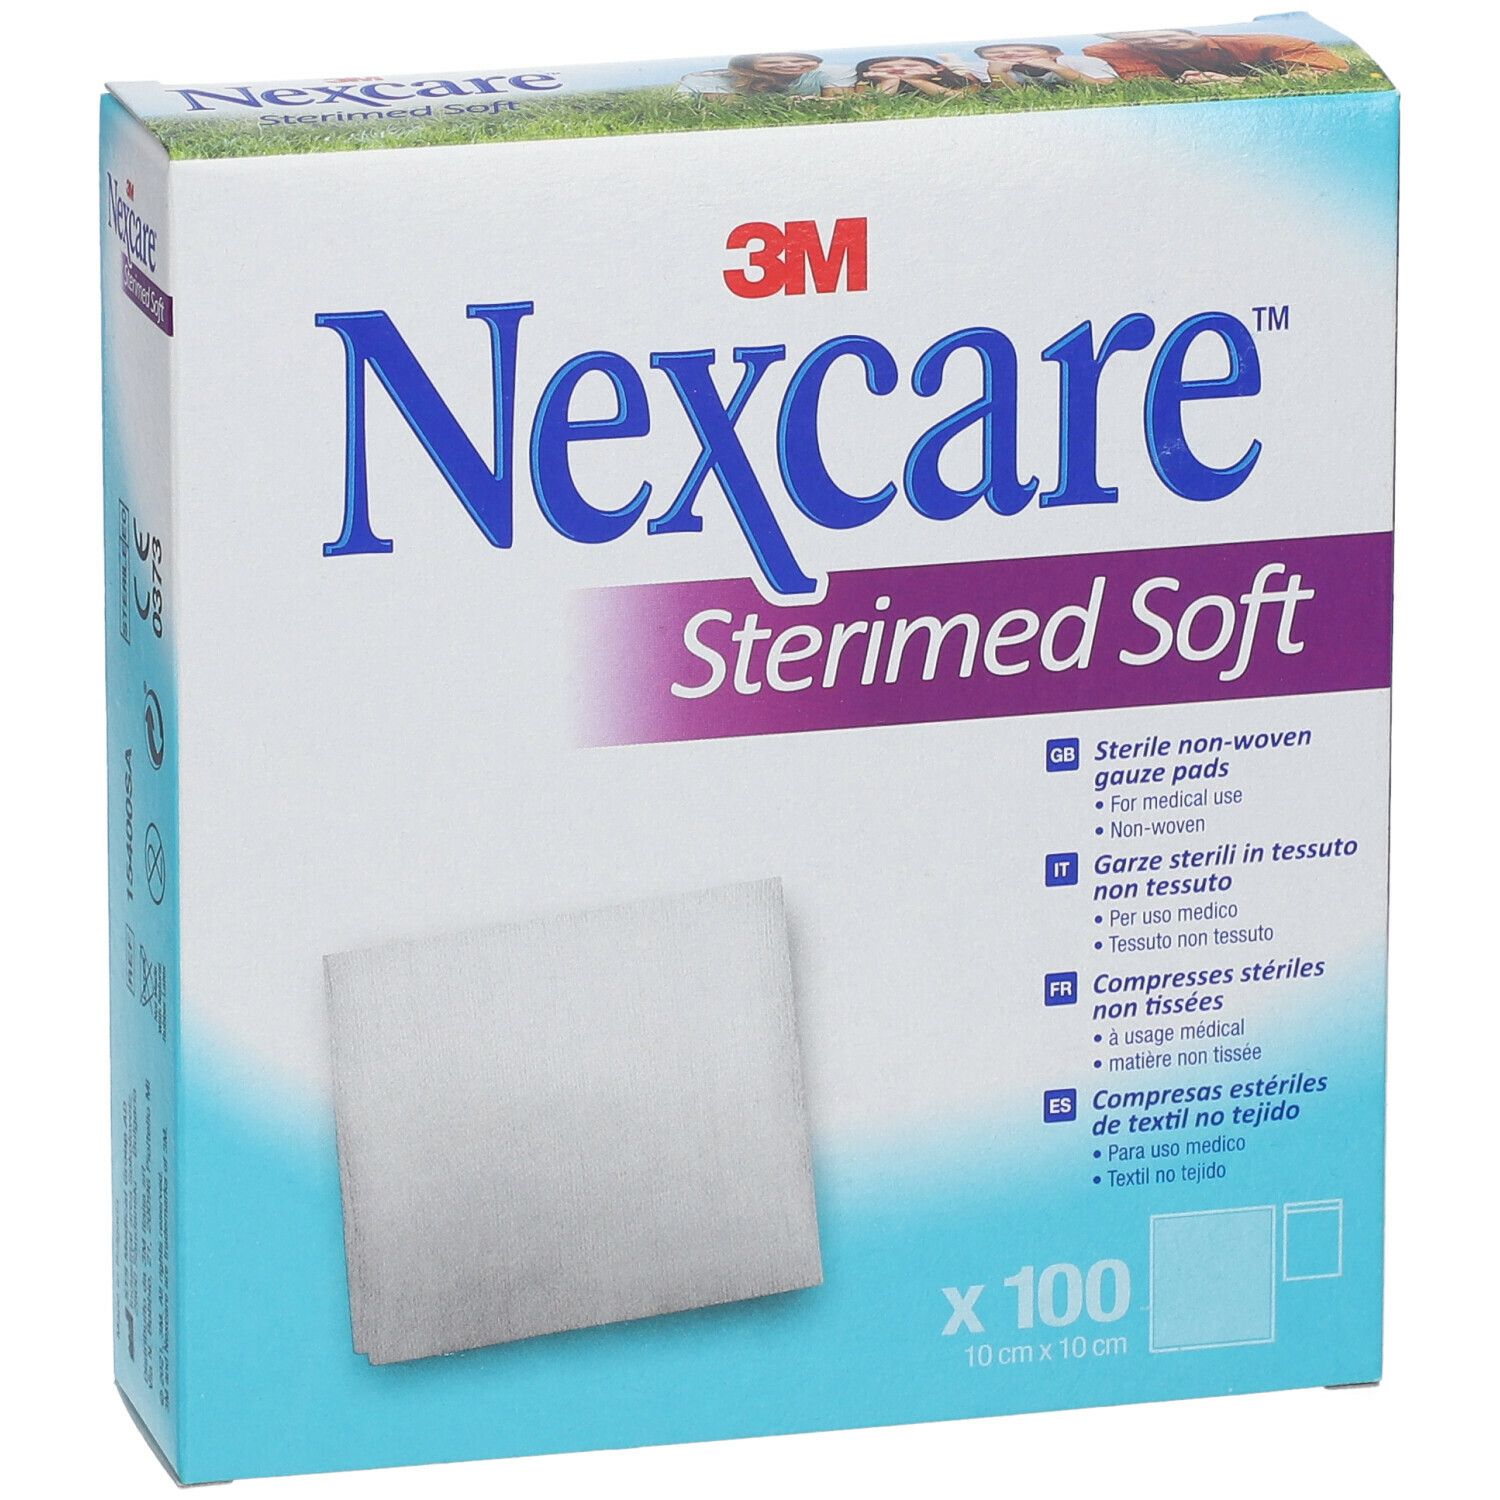 3M Nexcare™ Sterimed Soft 10 x 10 cm